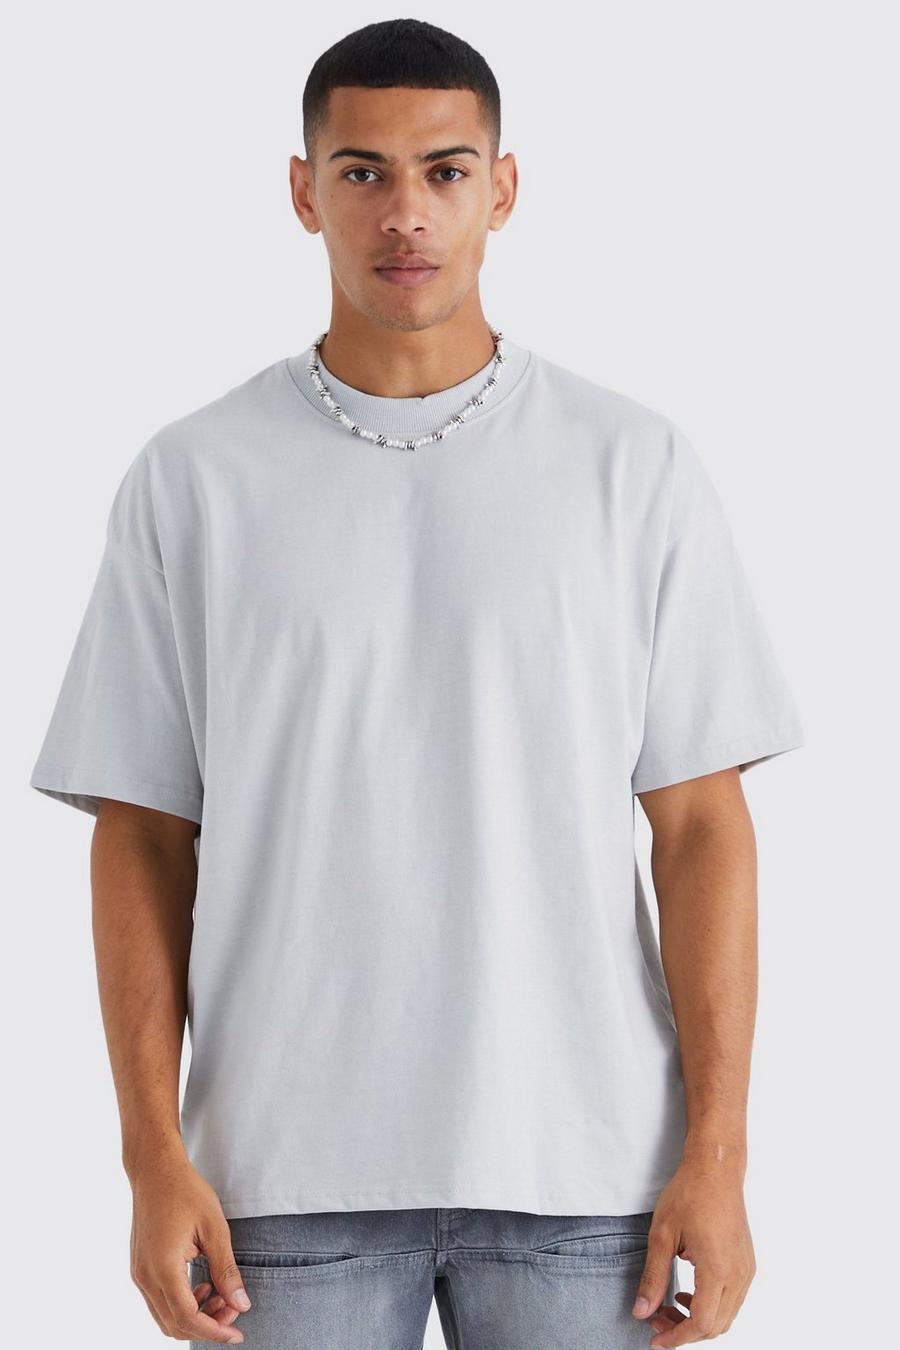 Dove Oversize t-shirt i tjockt tyg med hög halsmudd